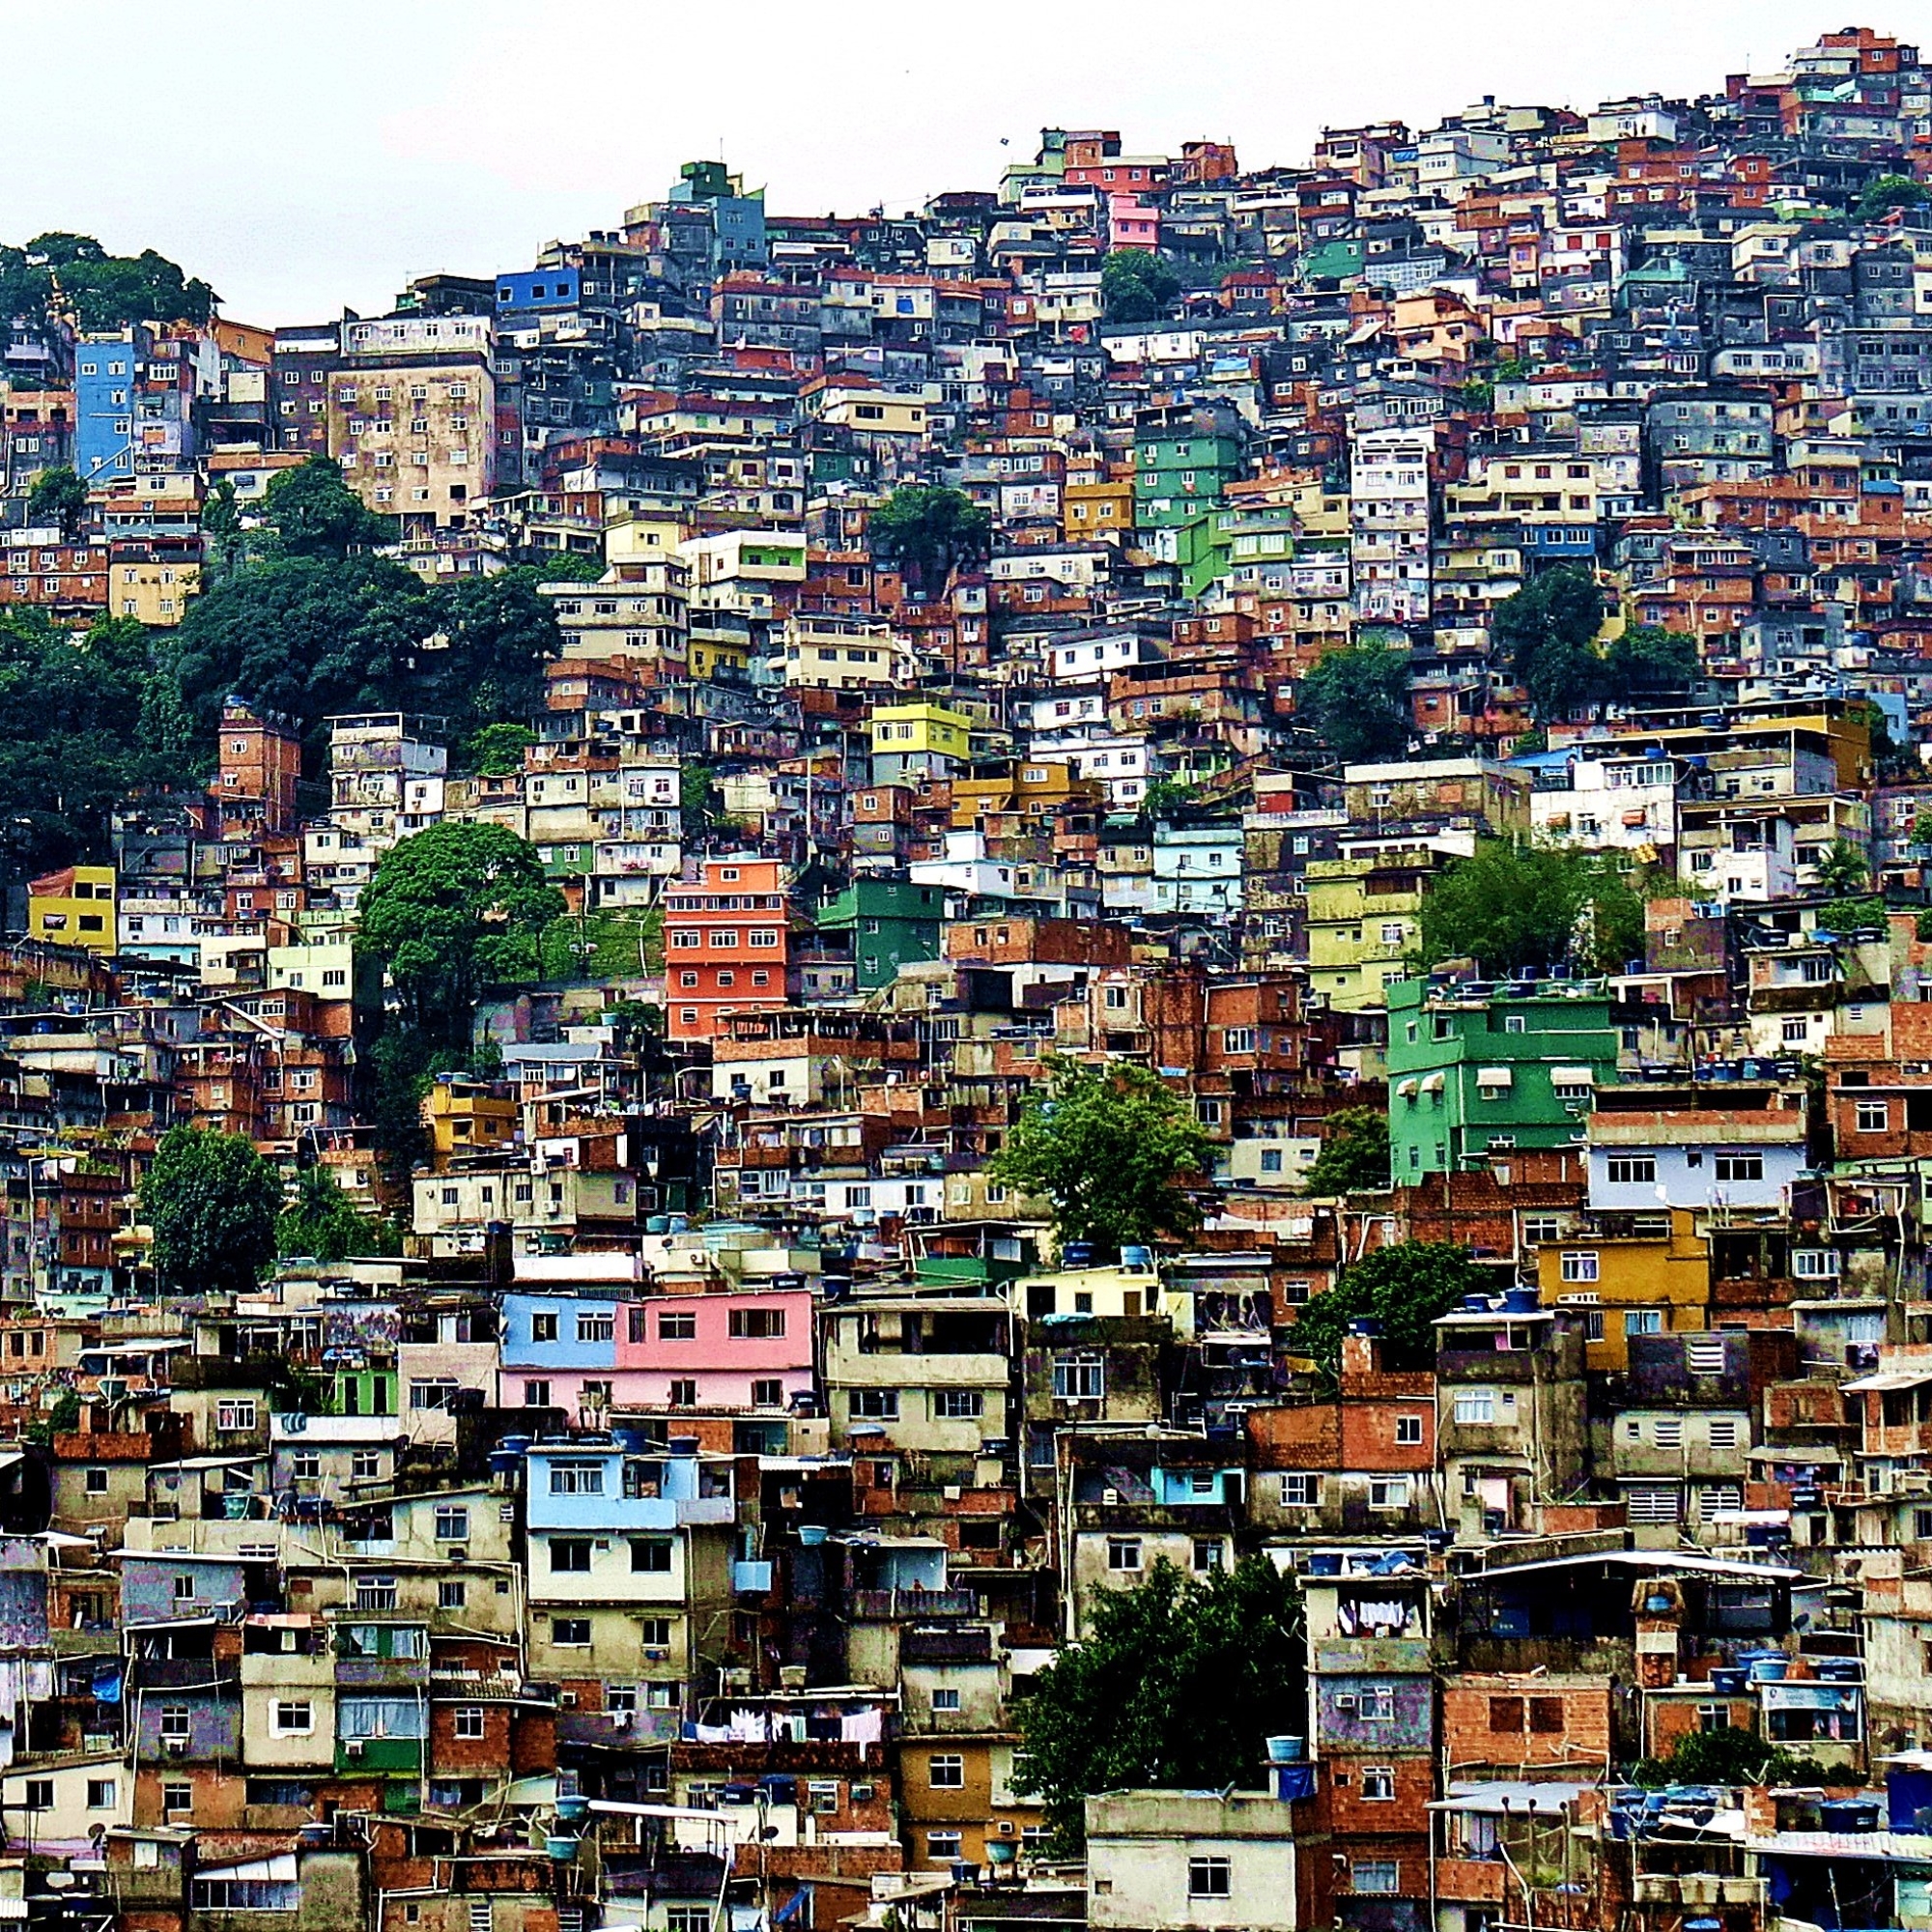 Slums in Favela, Brazil